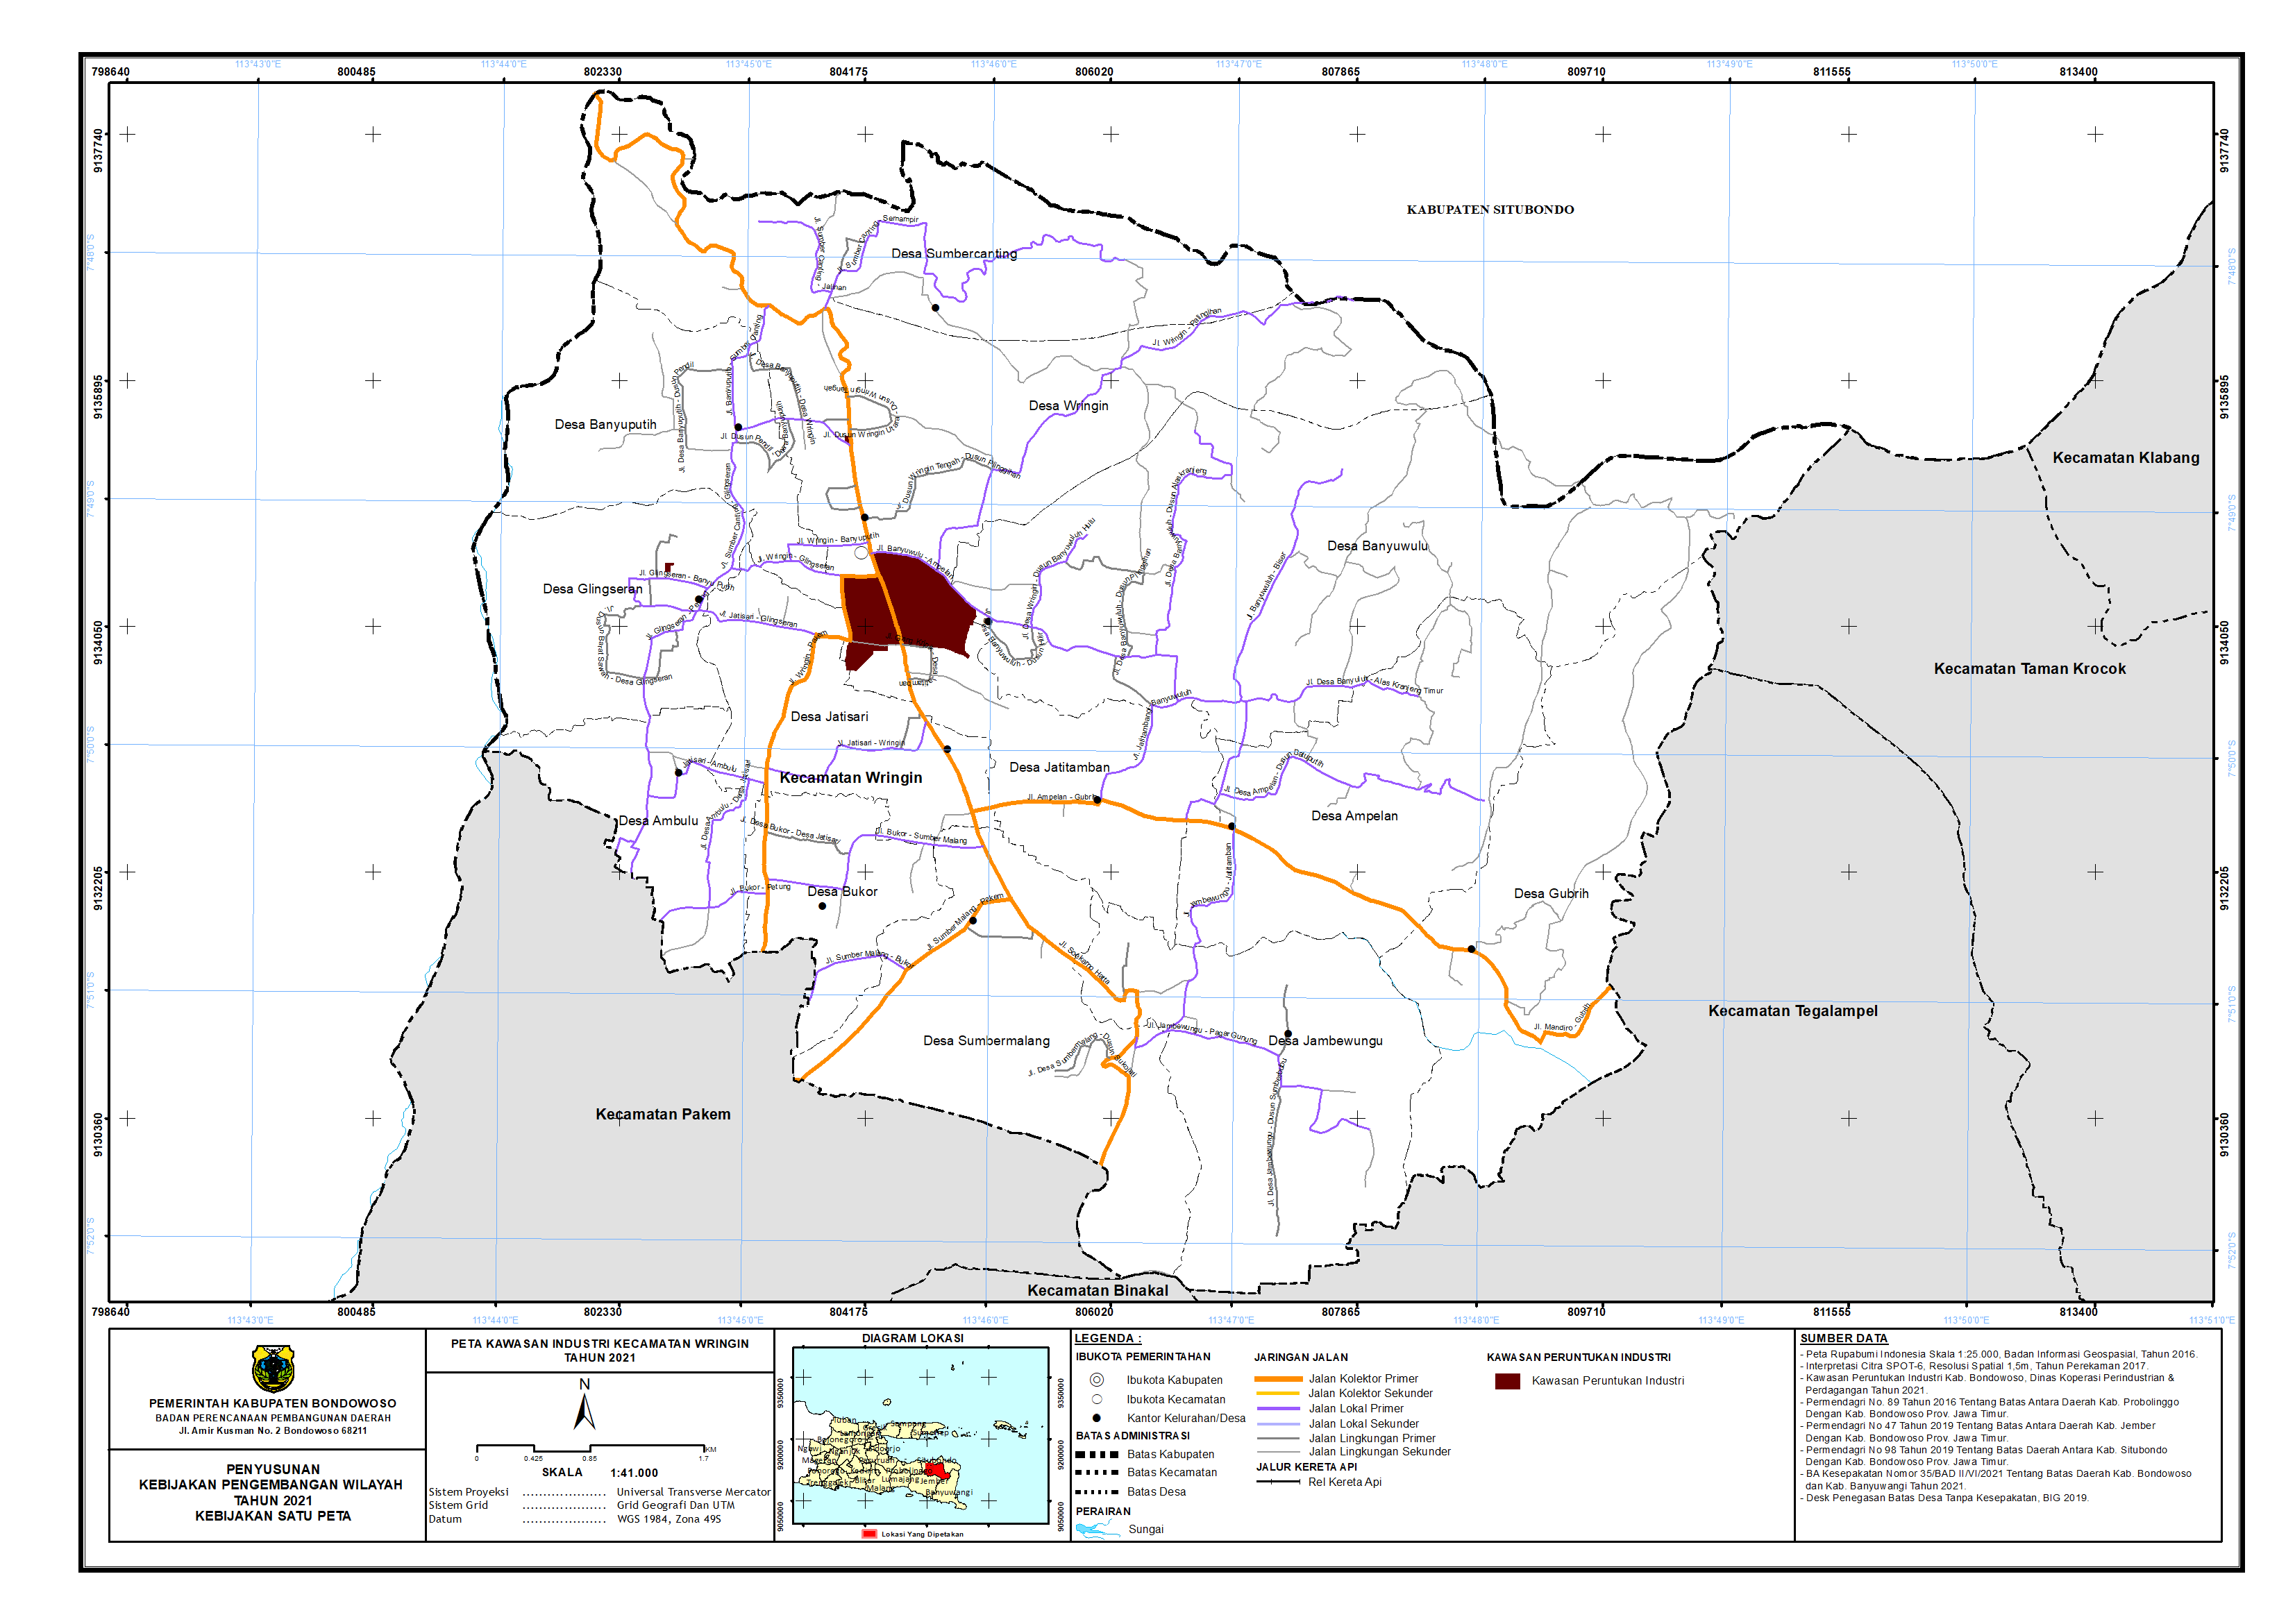 Peta Kawasan Industri Kecamatan Wringin.png